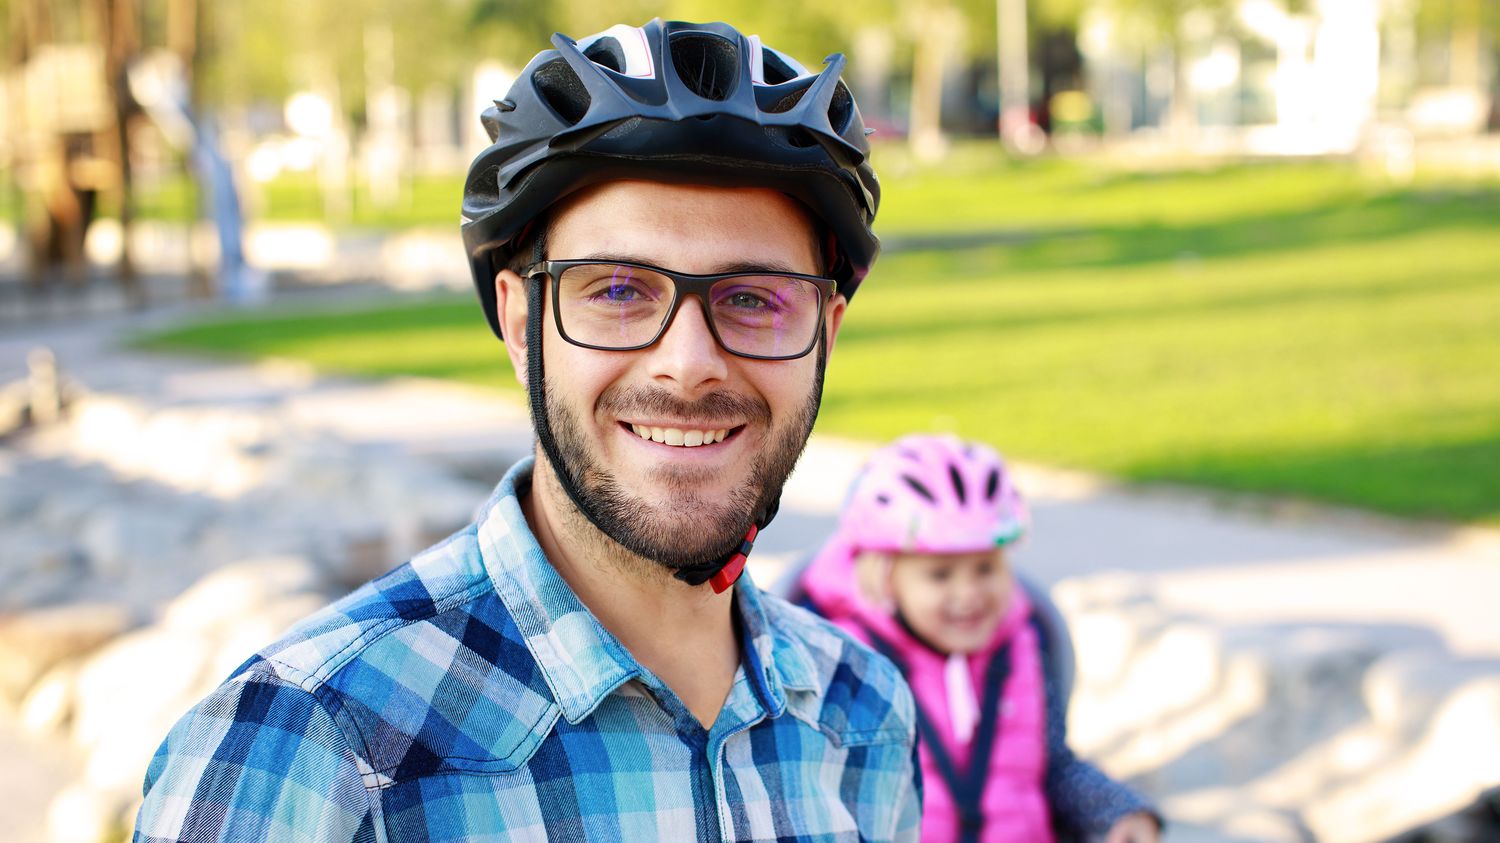 Bicicletta, ciclista, mobilità dolce, salute, famiglia, papà, comunità